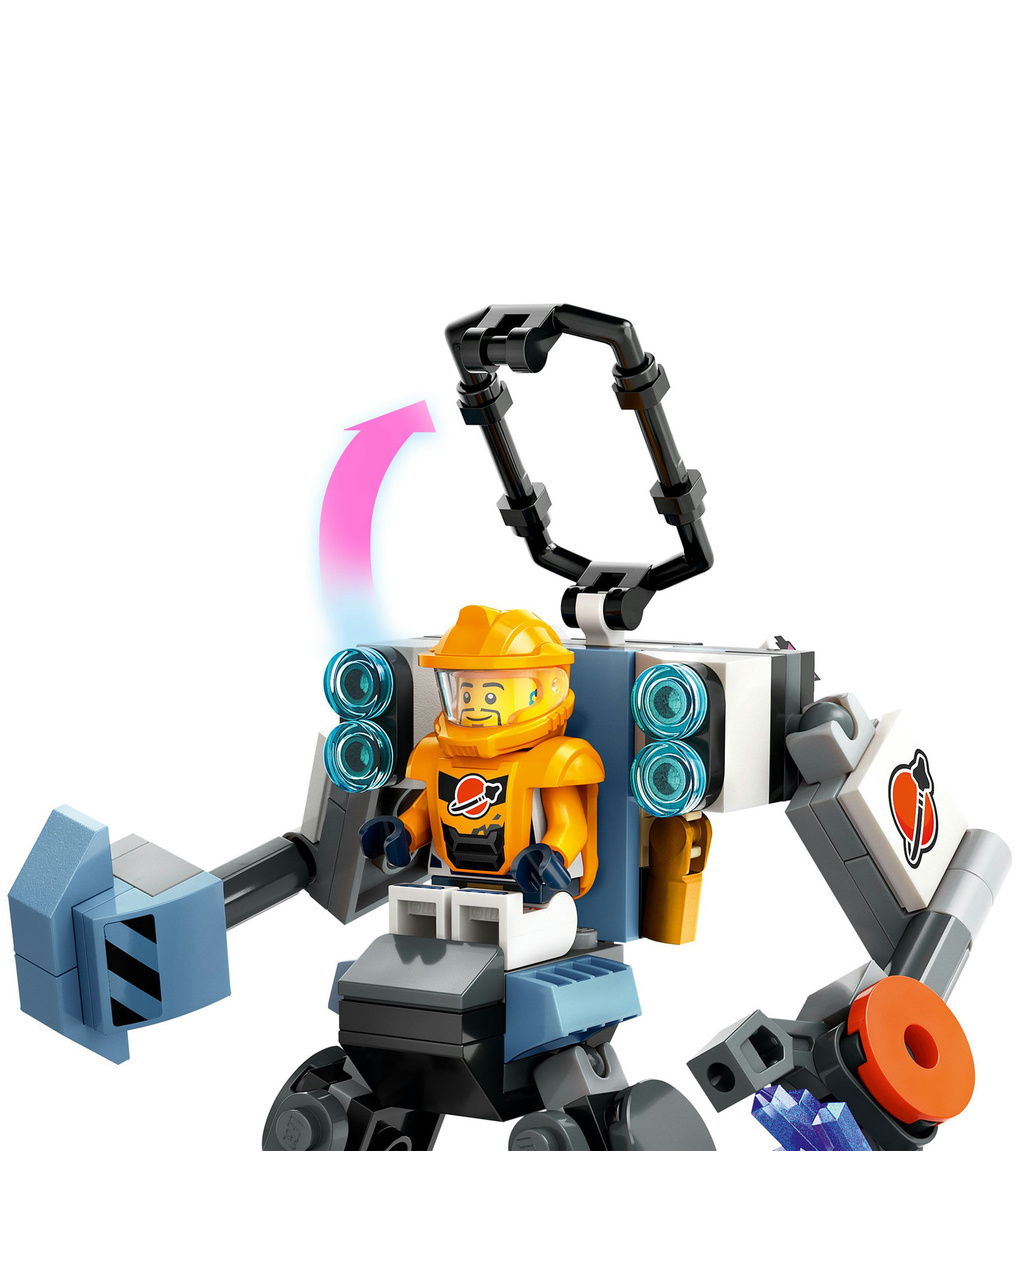 Space construction mech - 60428 - lego city - LEGO